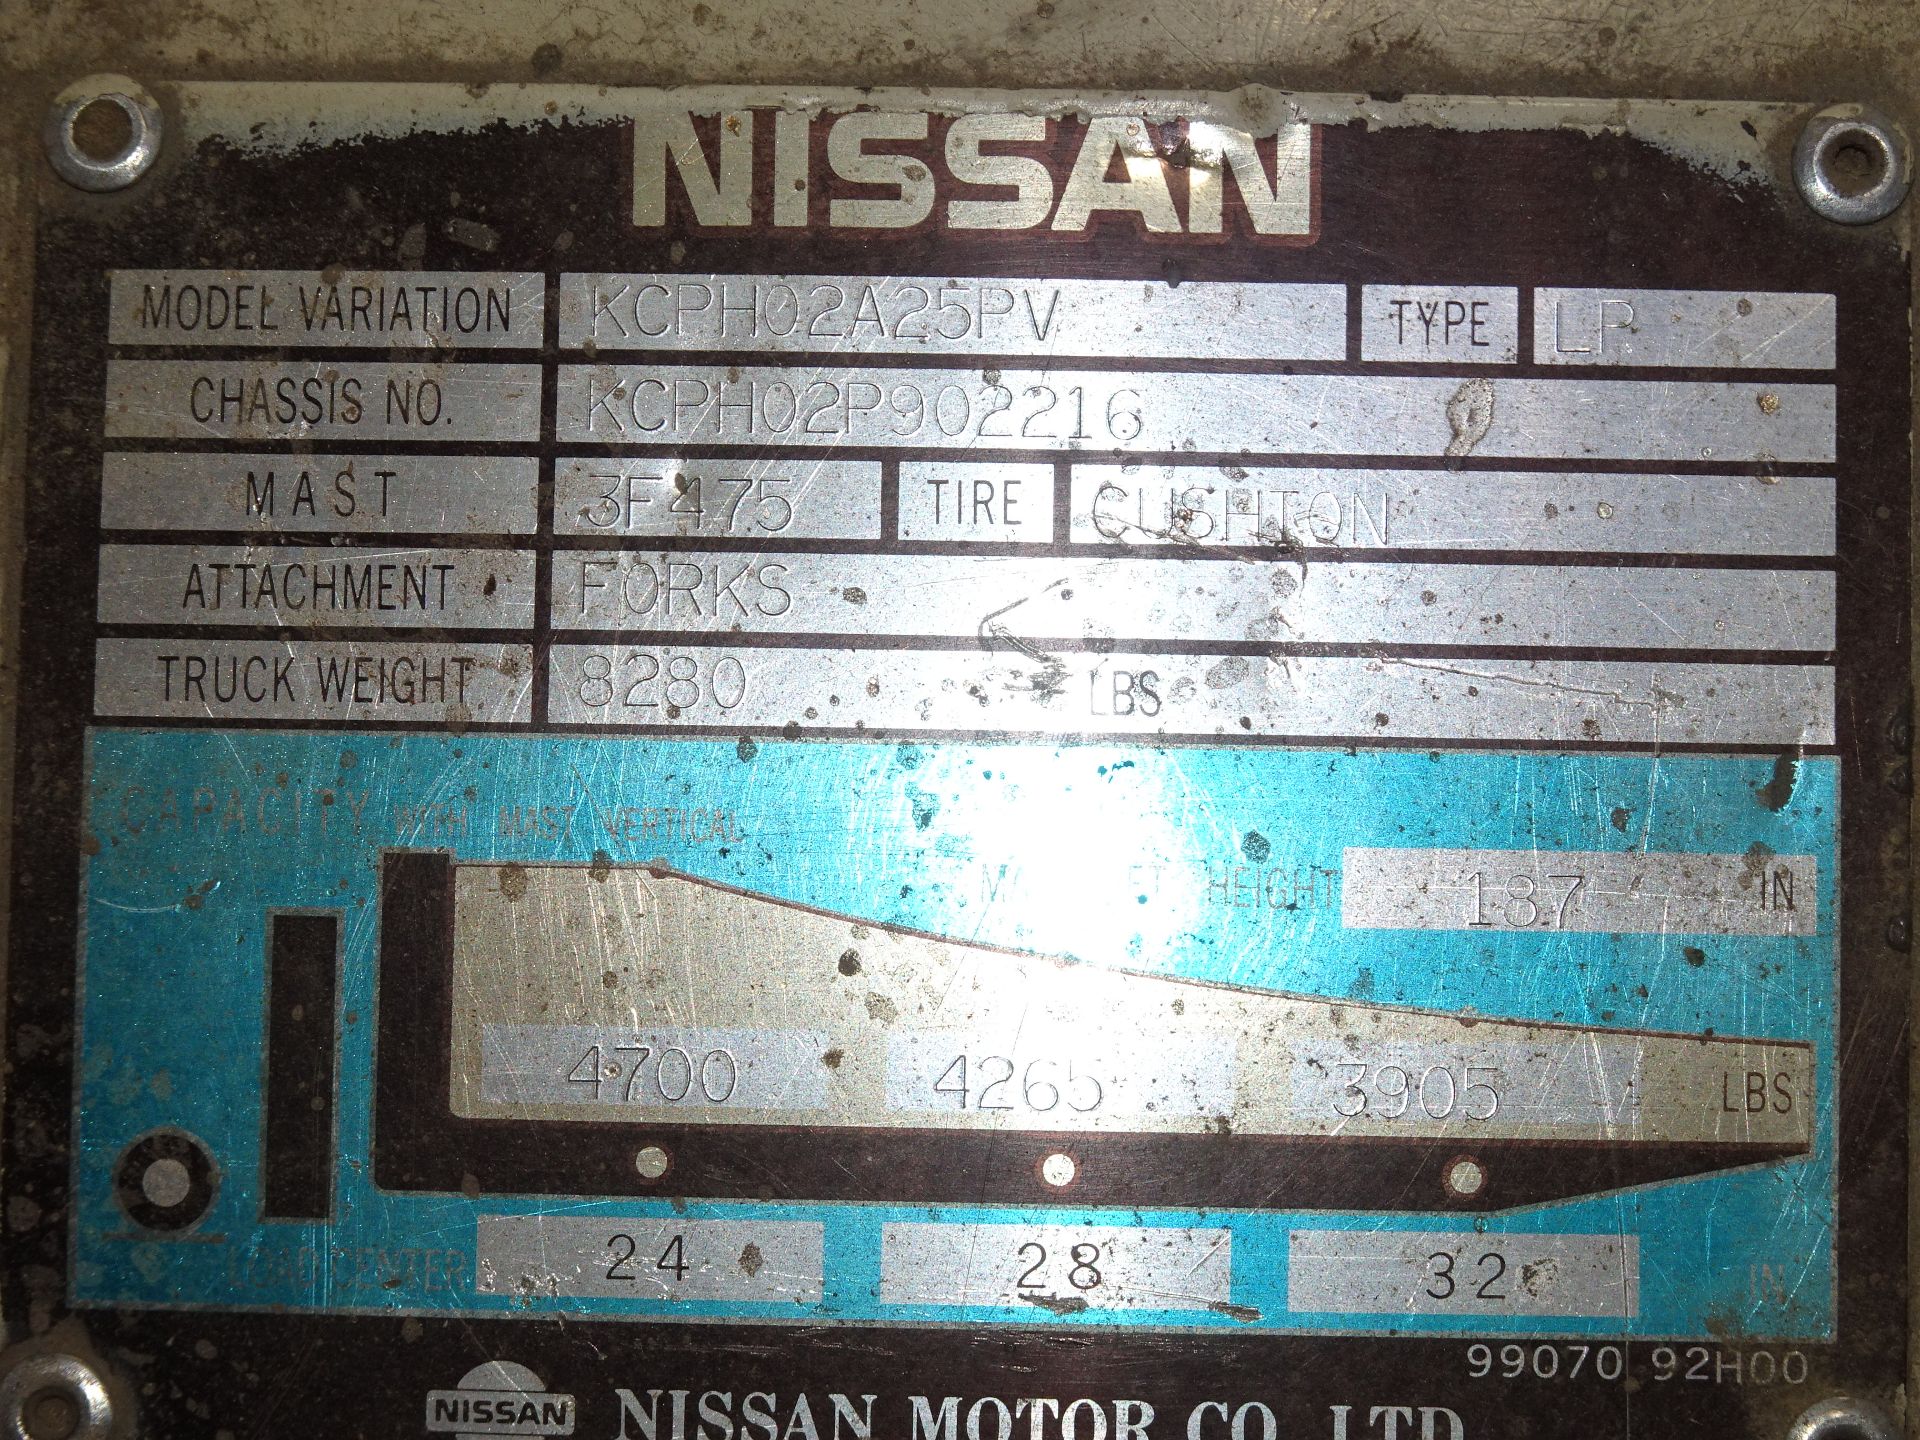 Nissan Model KCPH02A25PV 4700 lb Capacity LP Forklift - Image 3 of 4